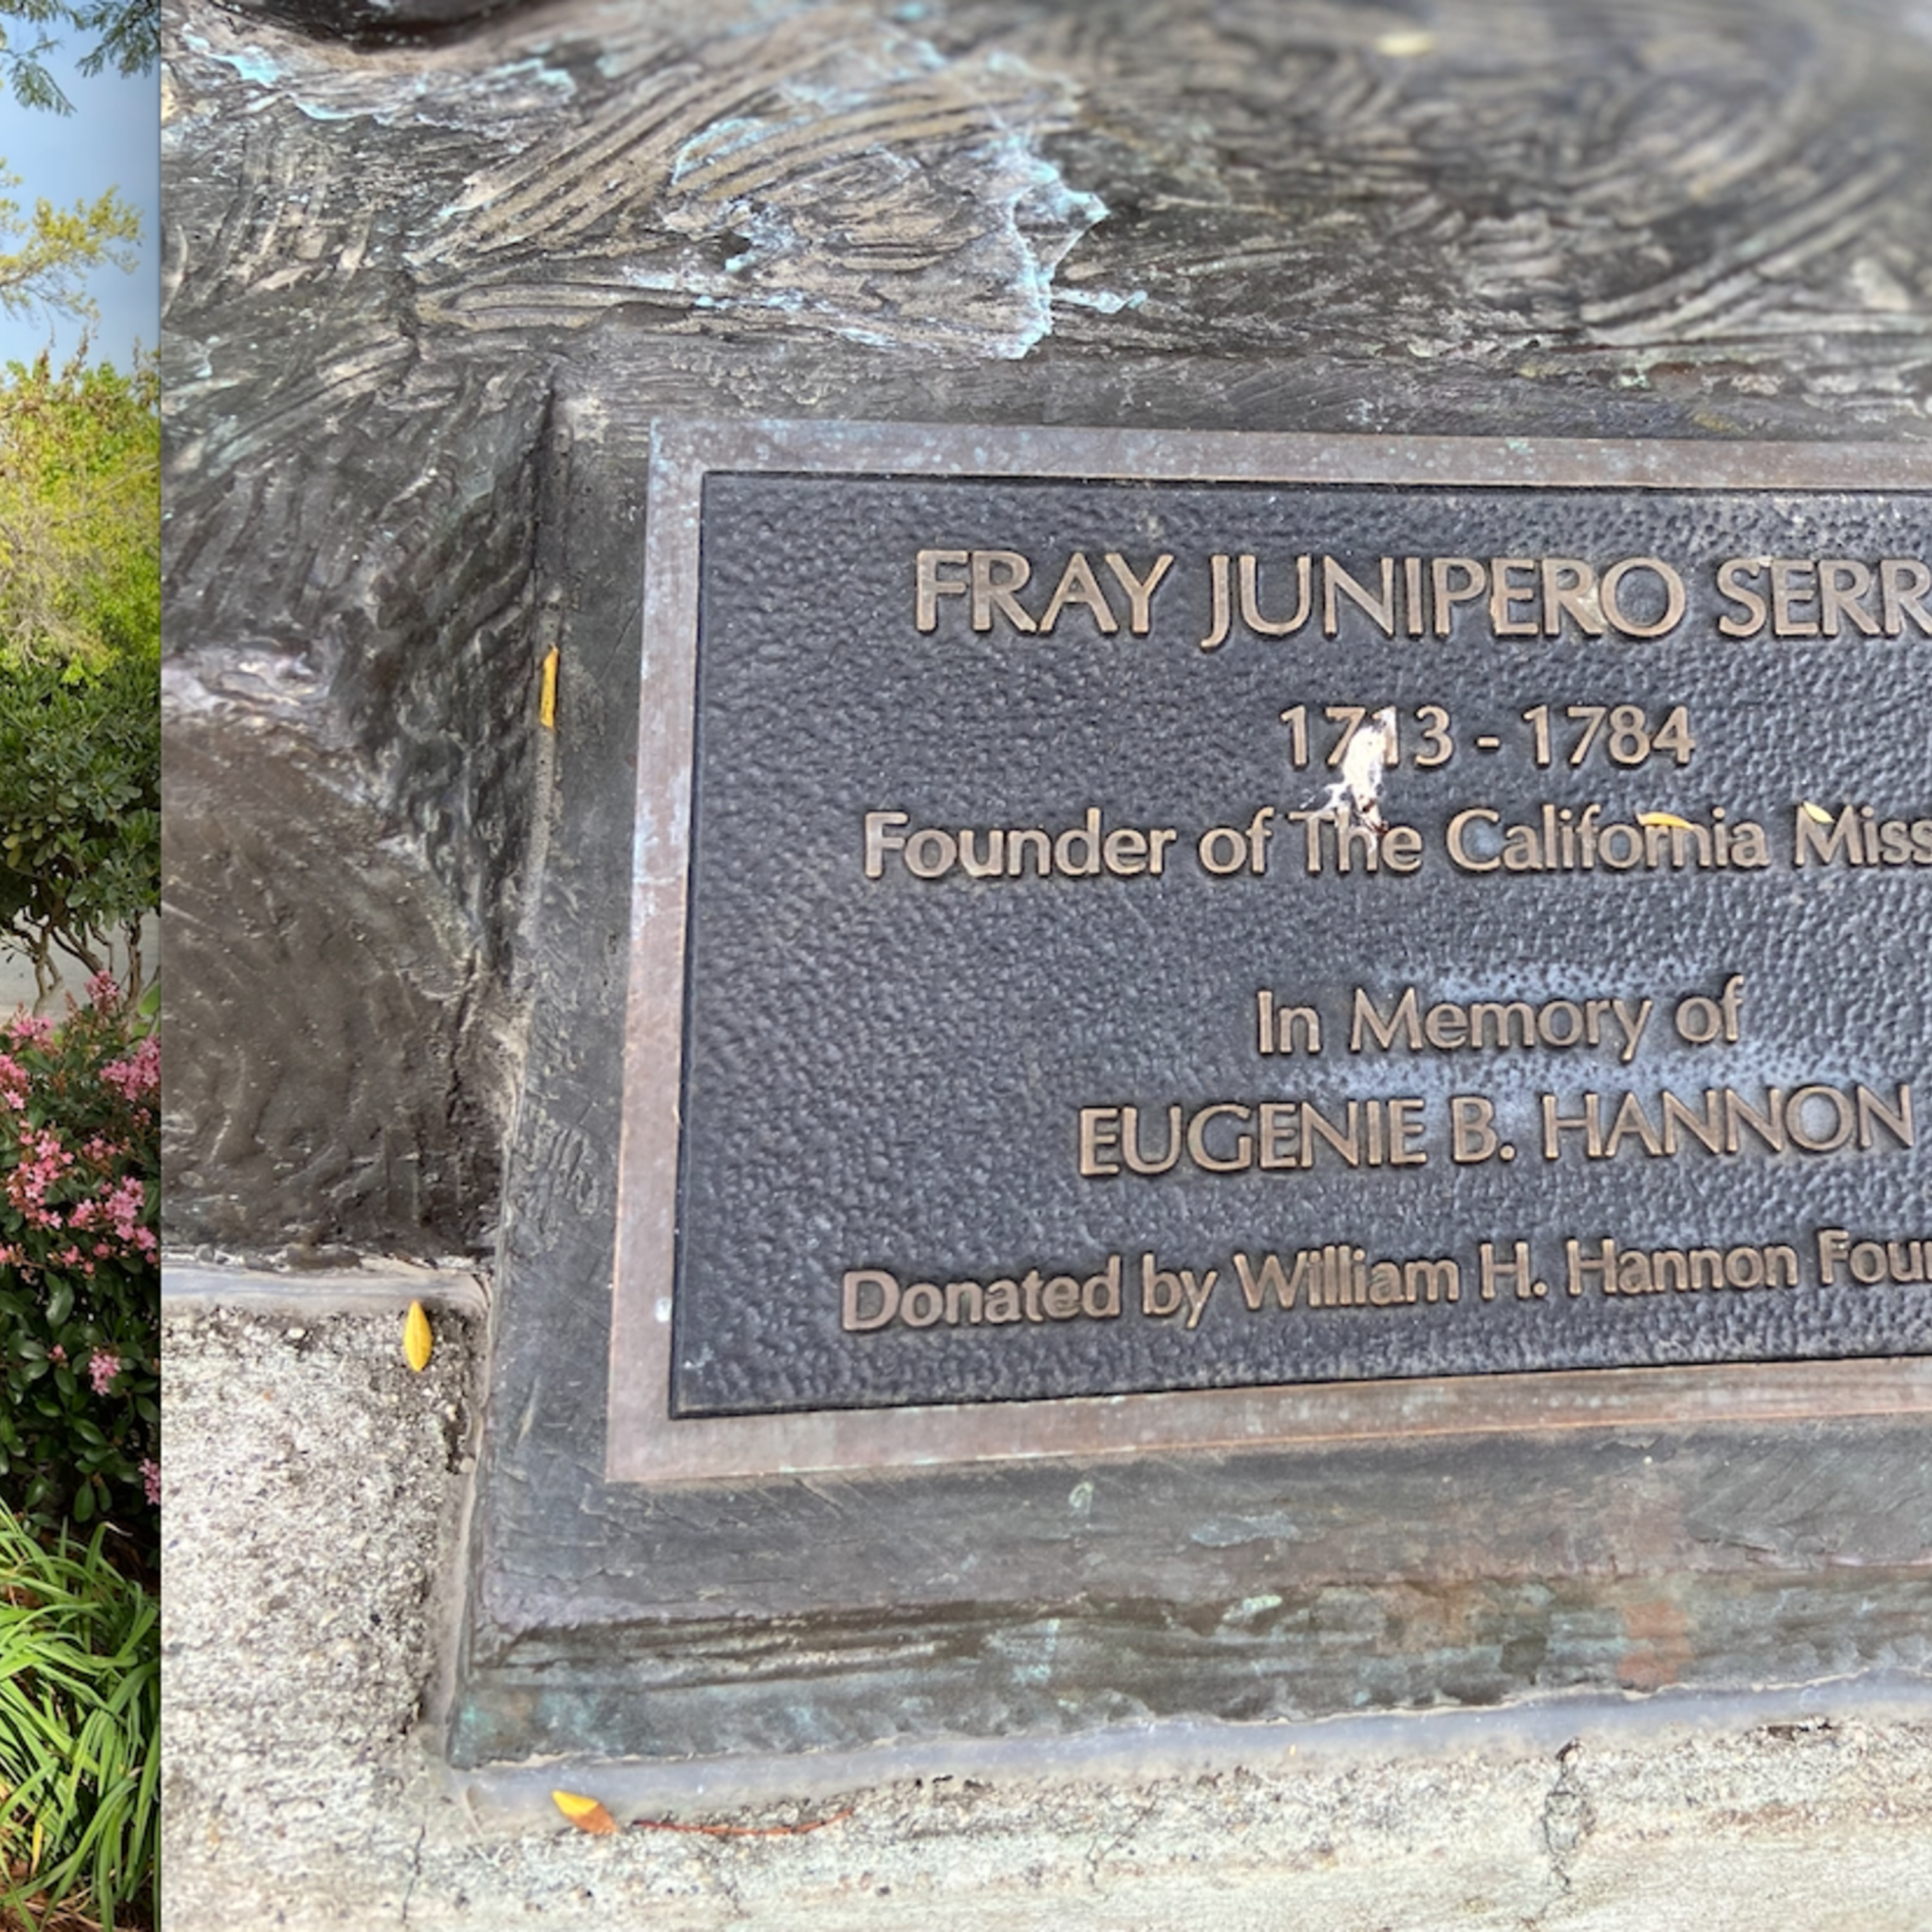 Fray Junipero Serra statue and plaque at Mission Santa Clara